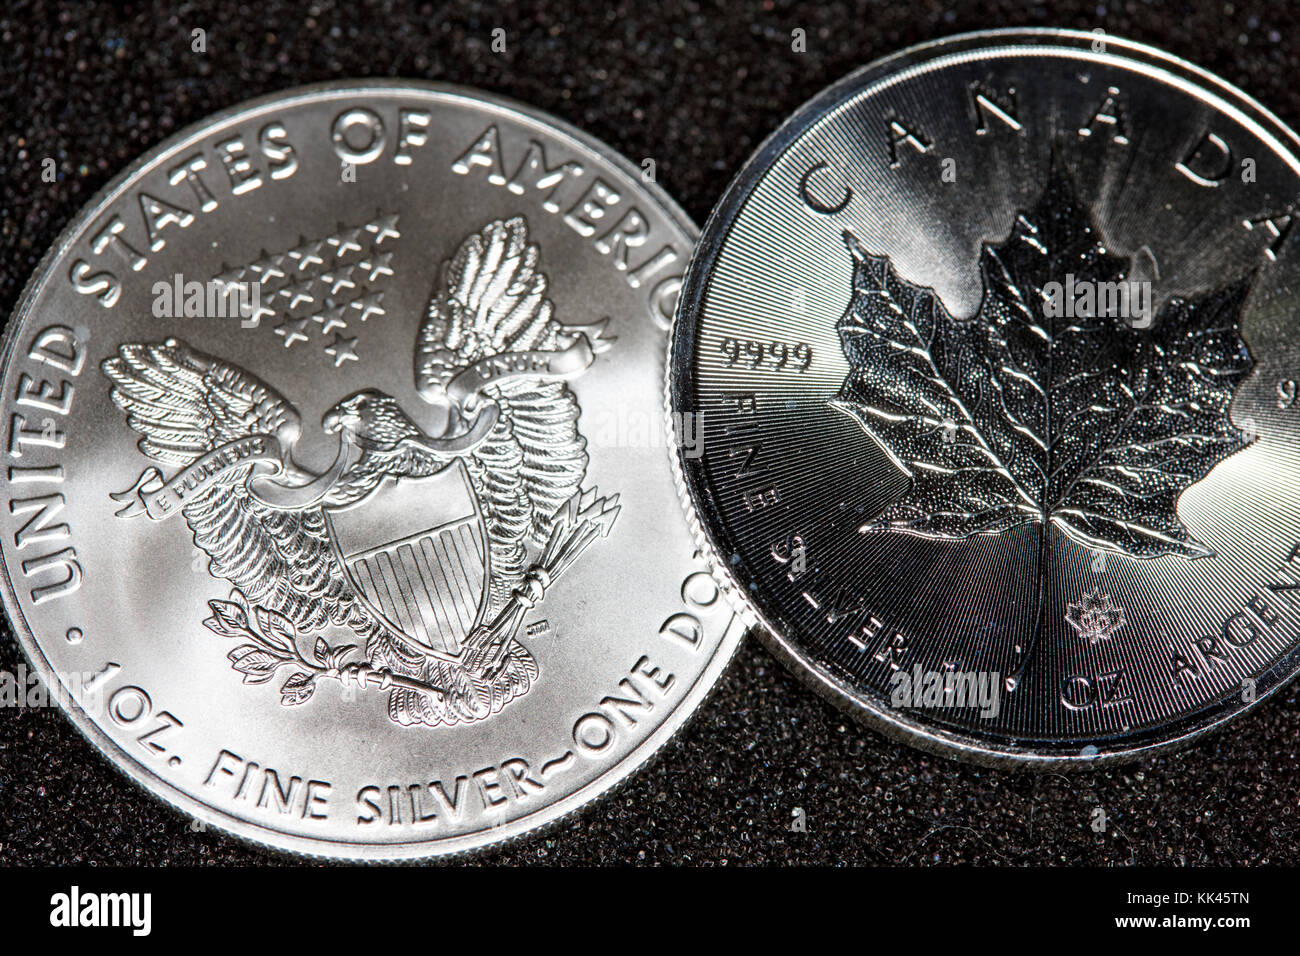 1oz lingotes de plata monedas estados unidos eagle y Canadian Maple Leaf Foto de stock